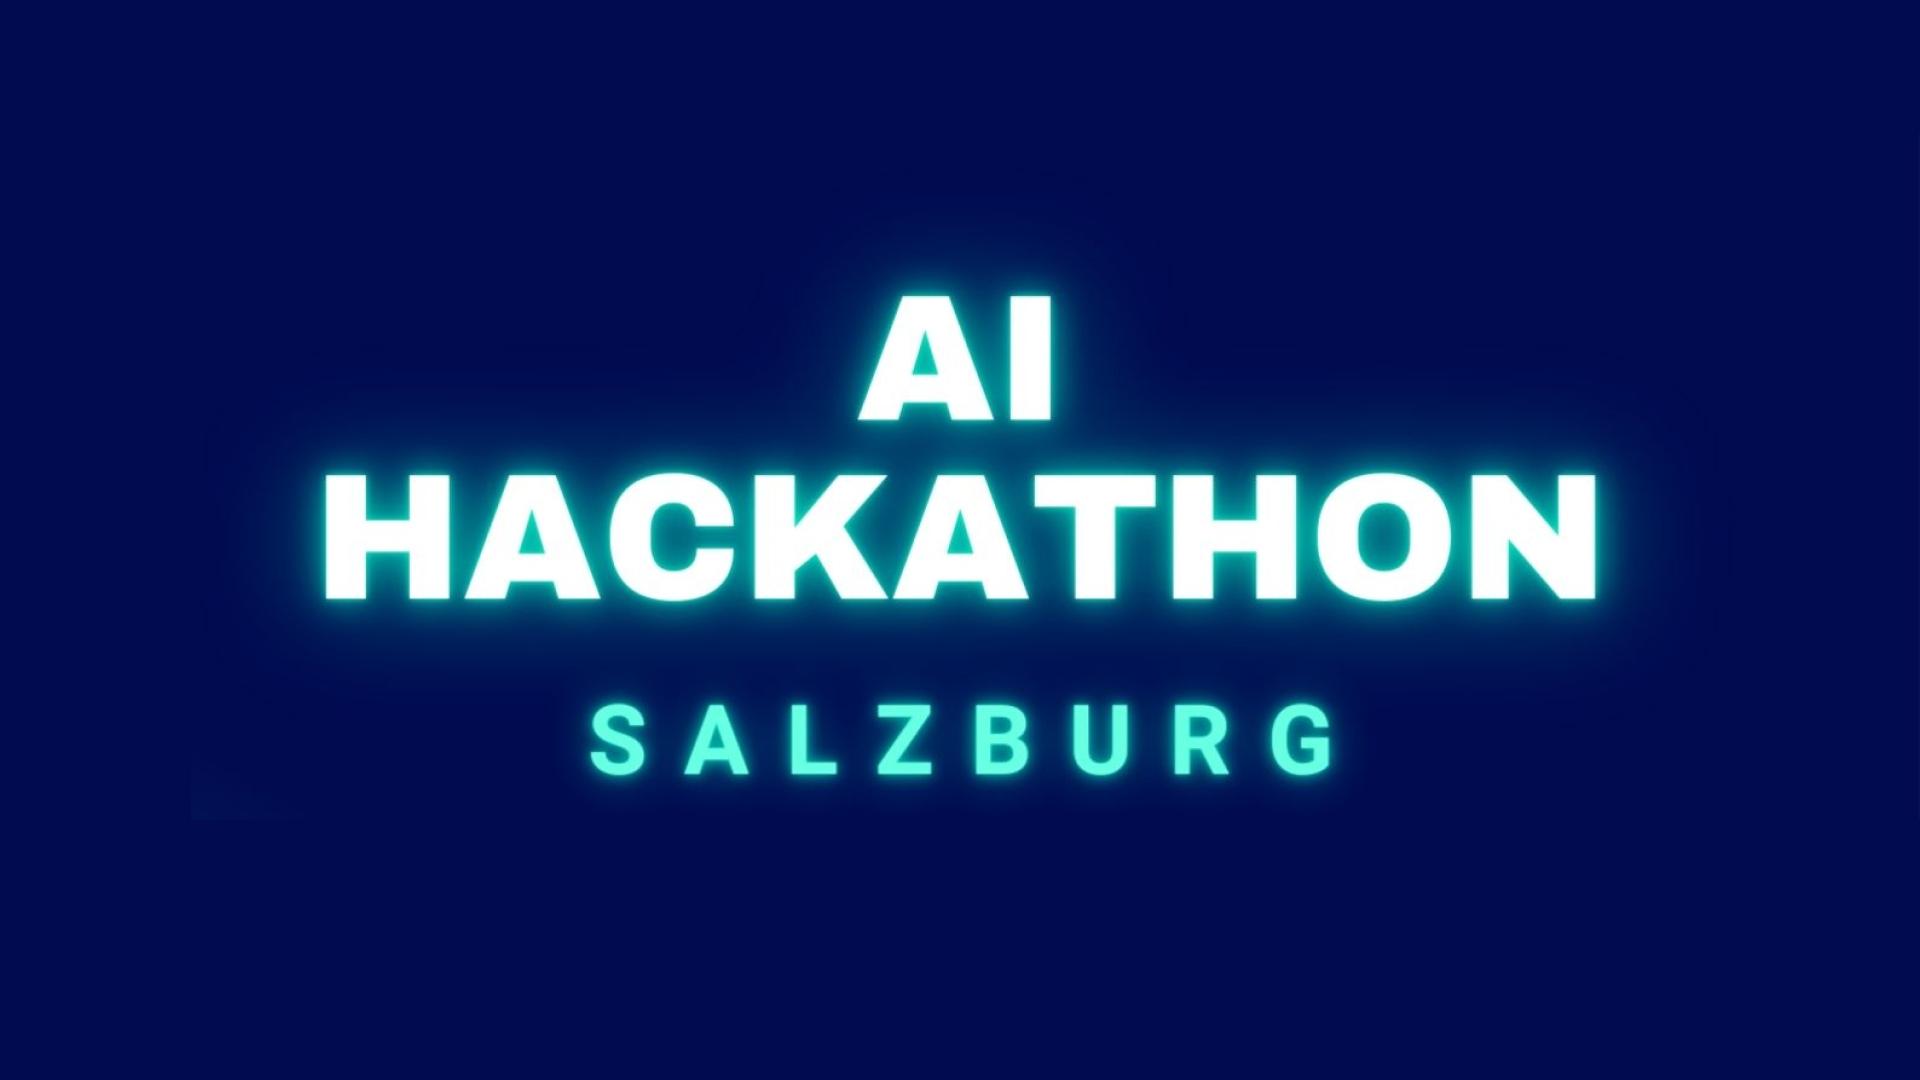 Salzburg AI Hackathon image